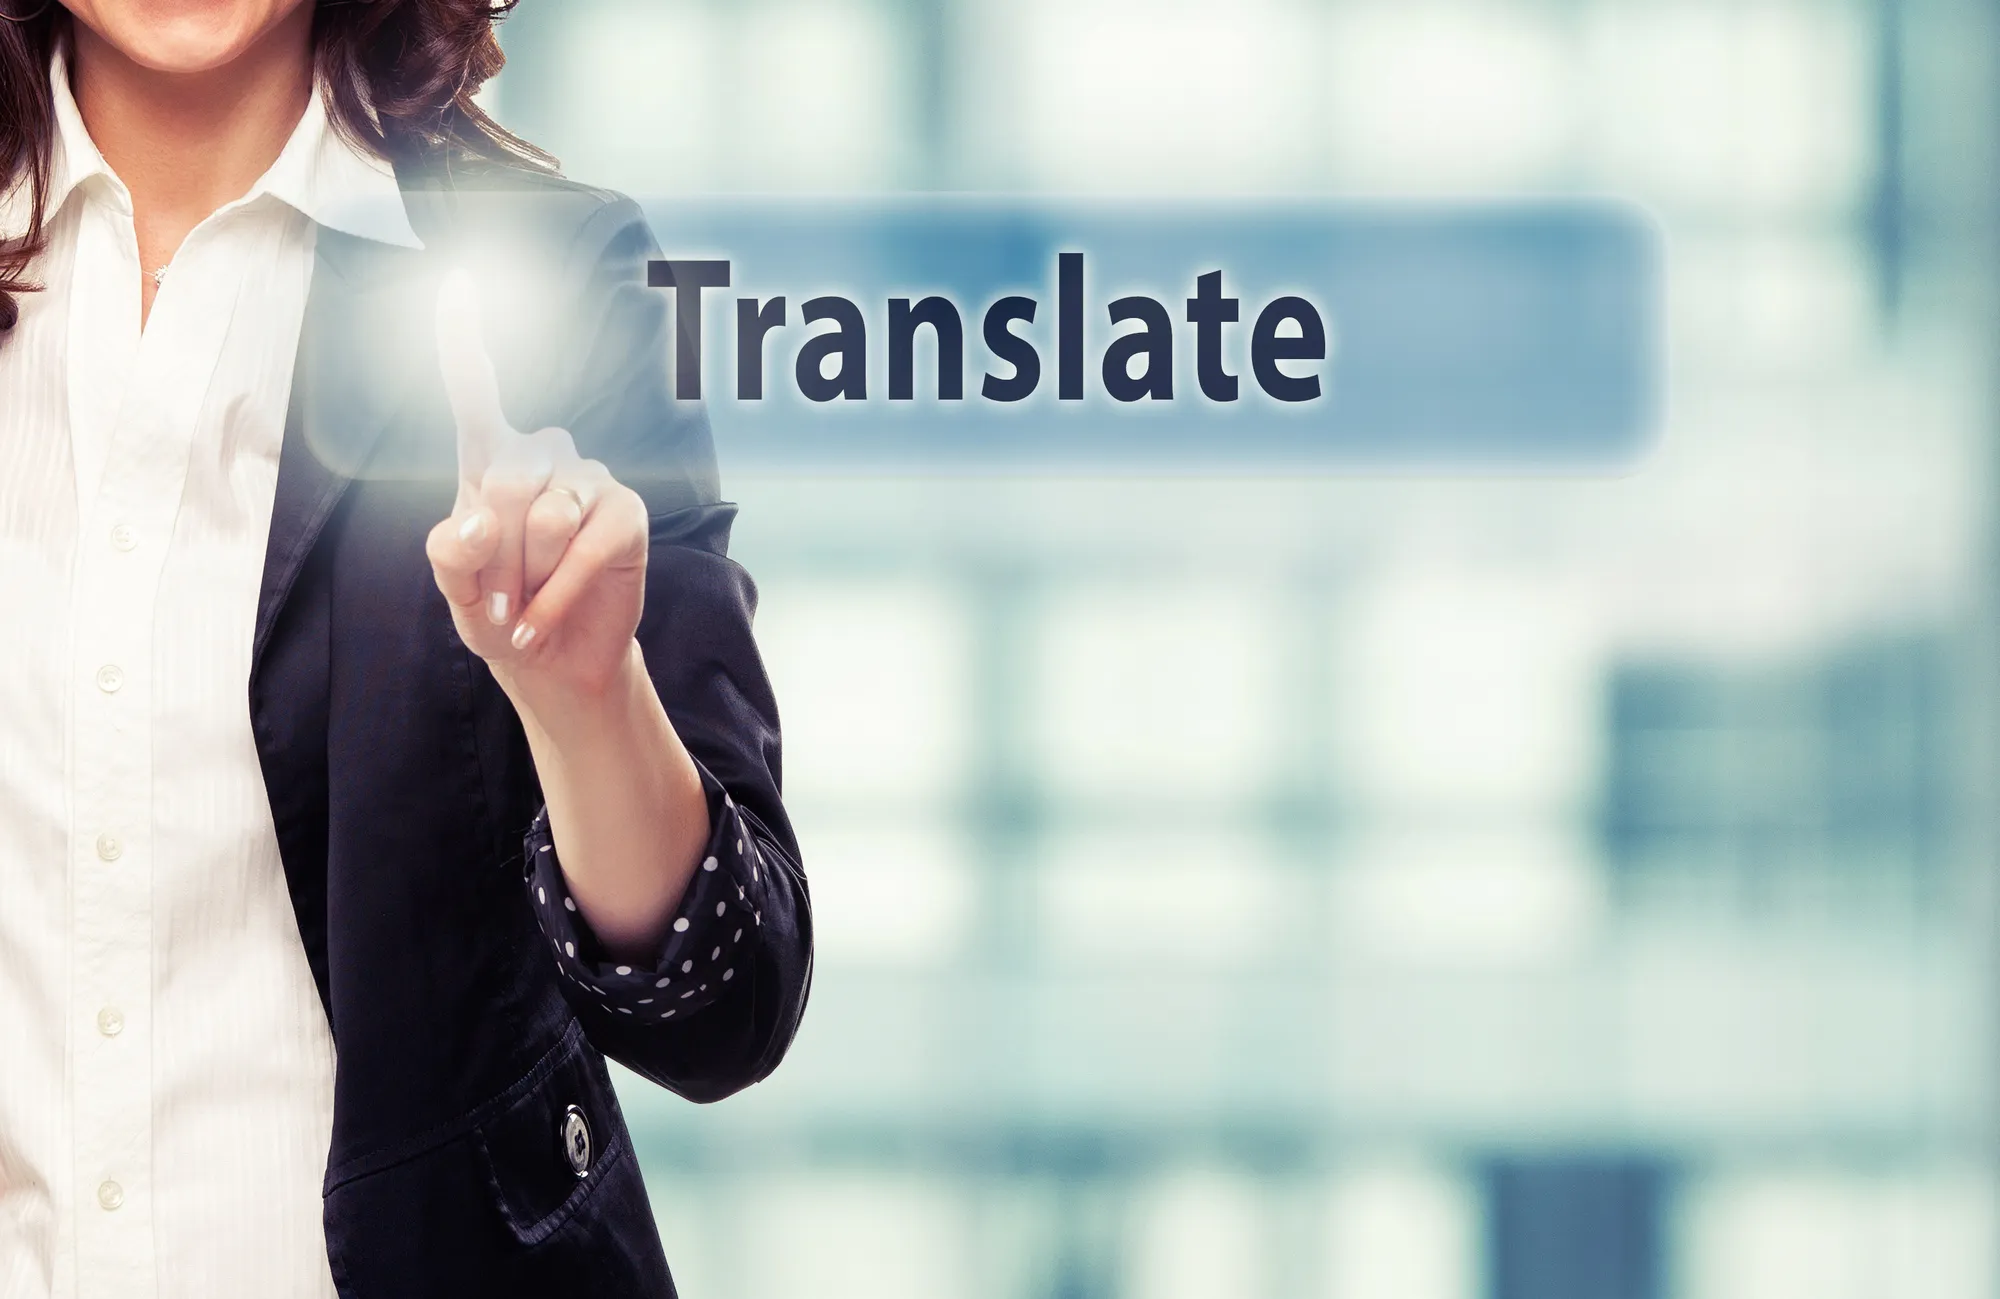 woman pressing translate button